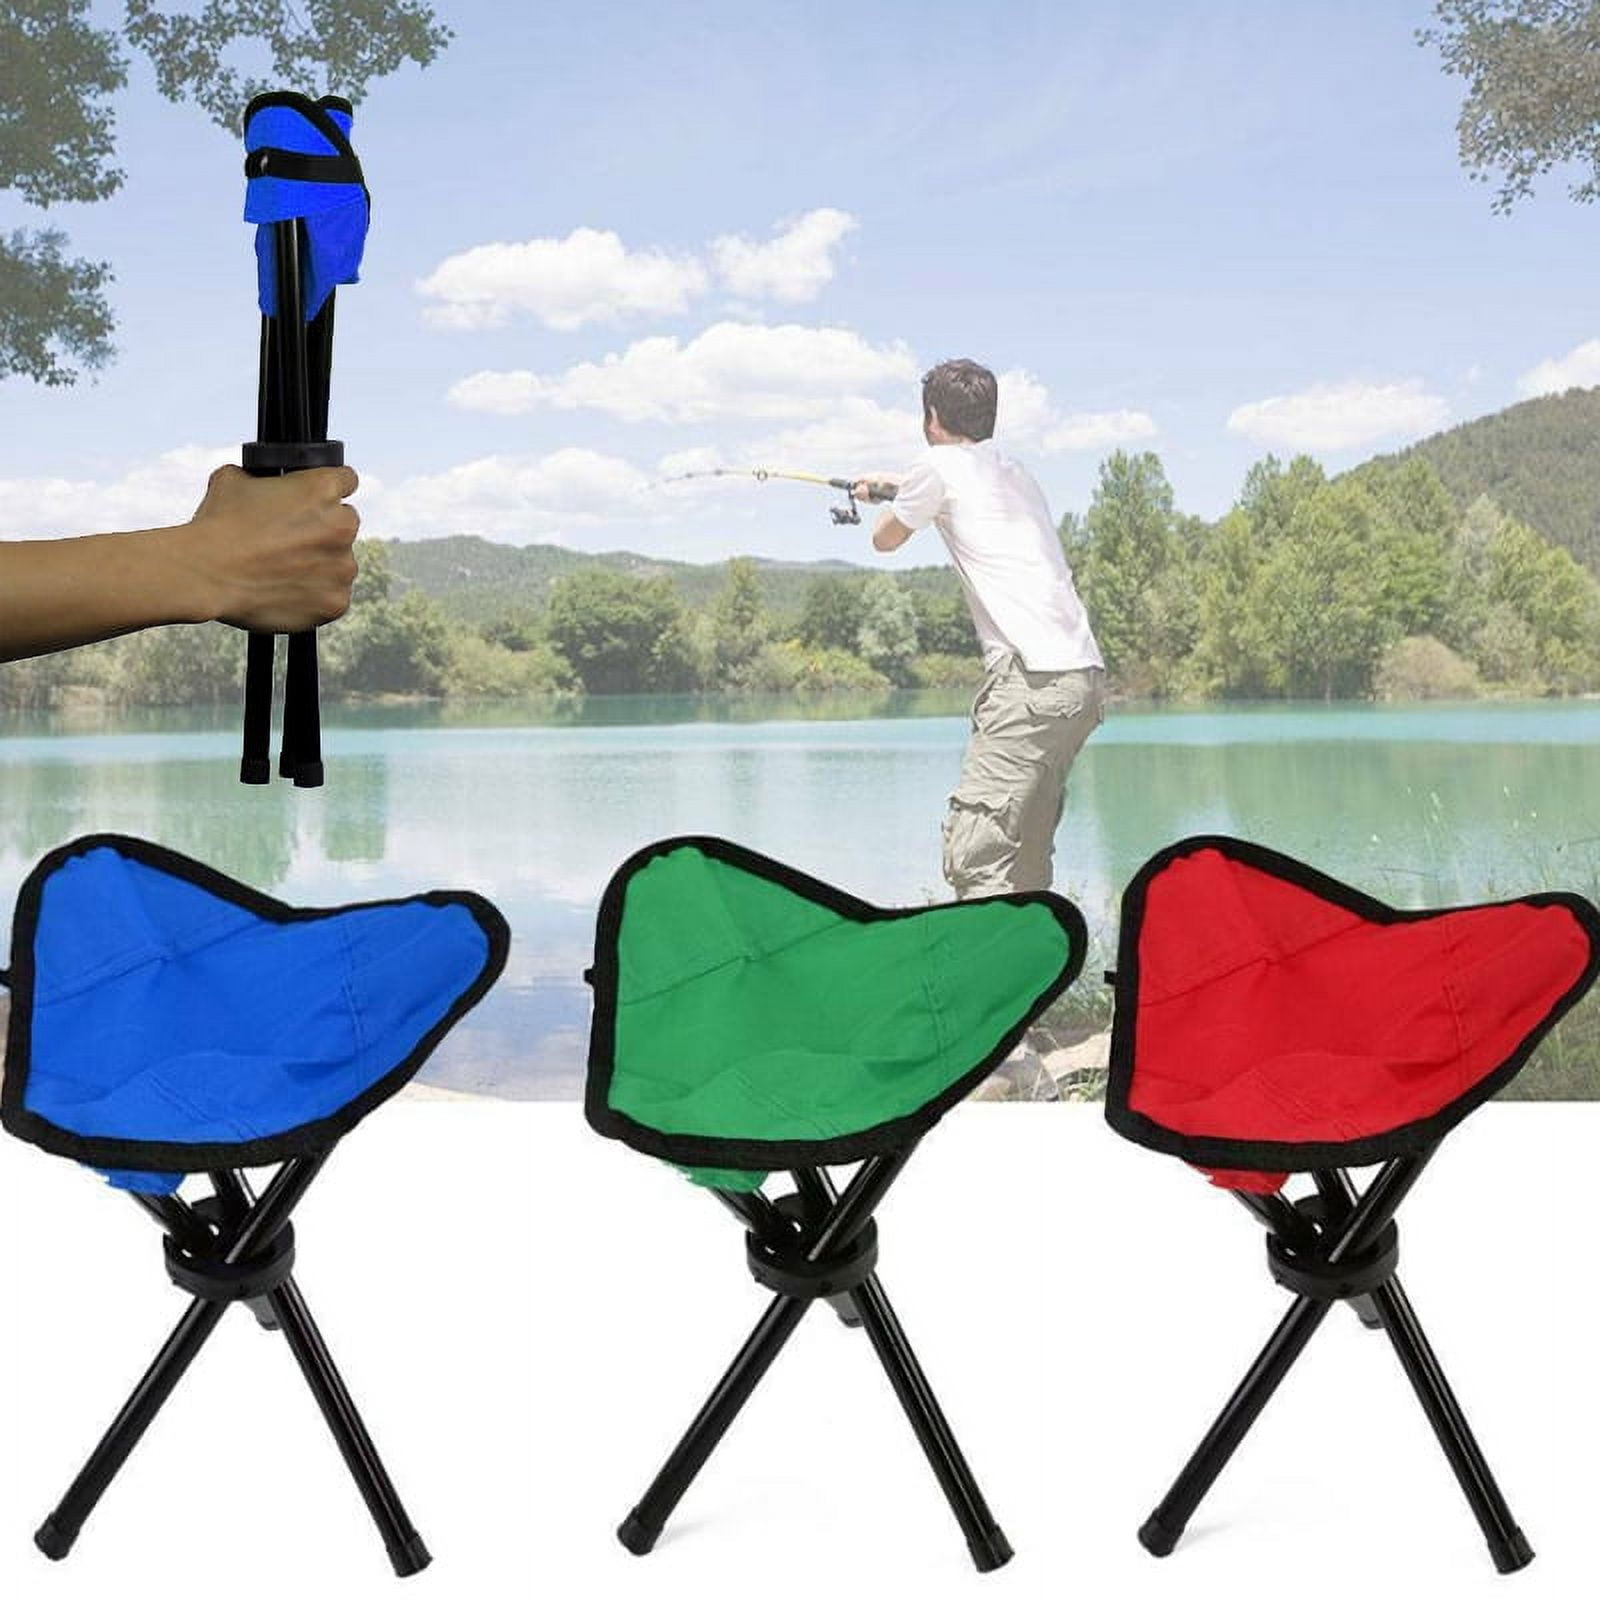 Baumaty Folding Stool Camping, Portable 3 Legs Chair Tripod Seat Oxford  Cloth For Outdoor Hiking Fishing Picnic Travel Beach BBQ Garden Lawn